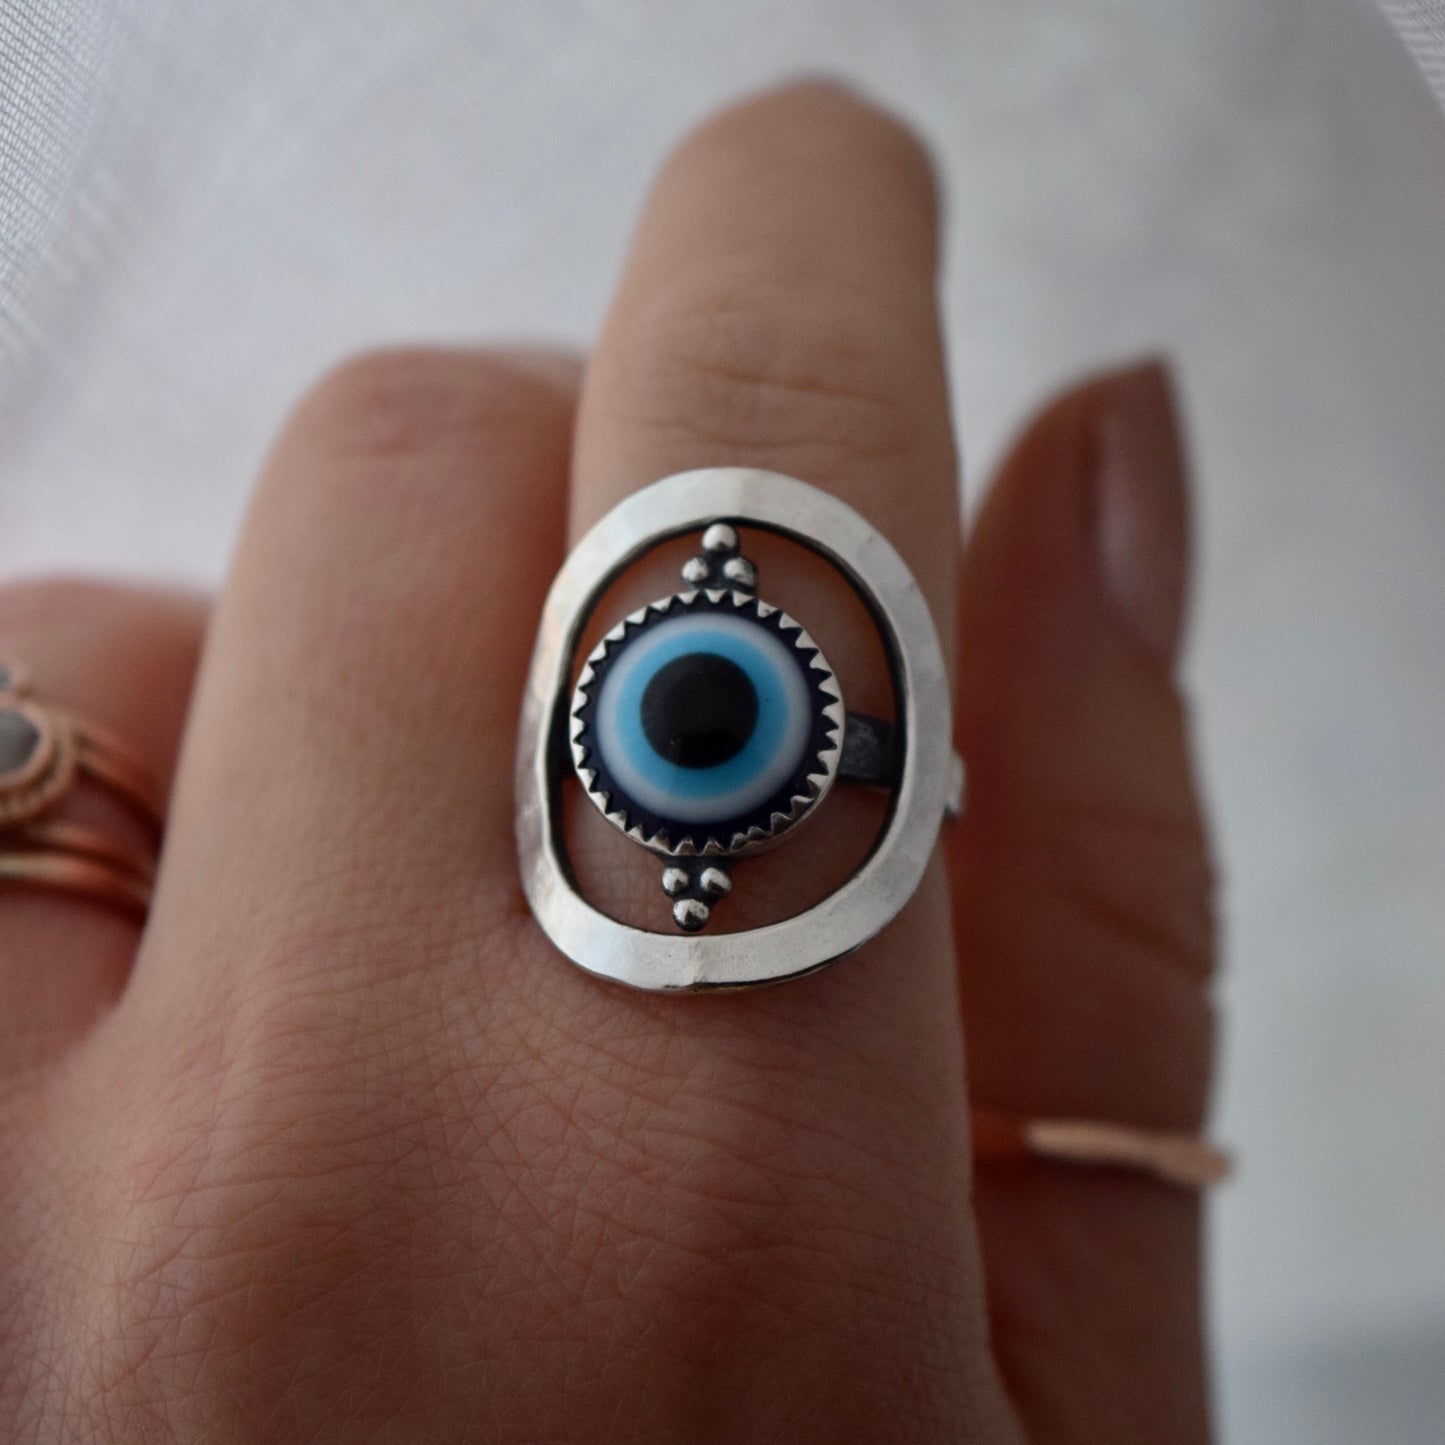 Enchanted Eye ring size 7